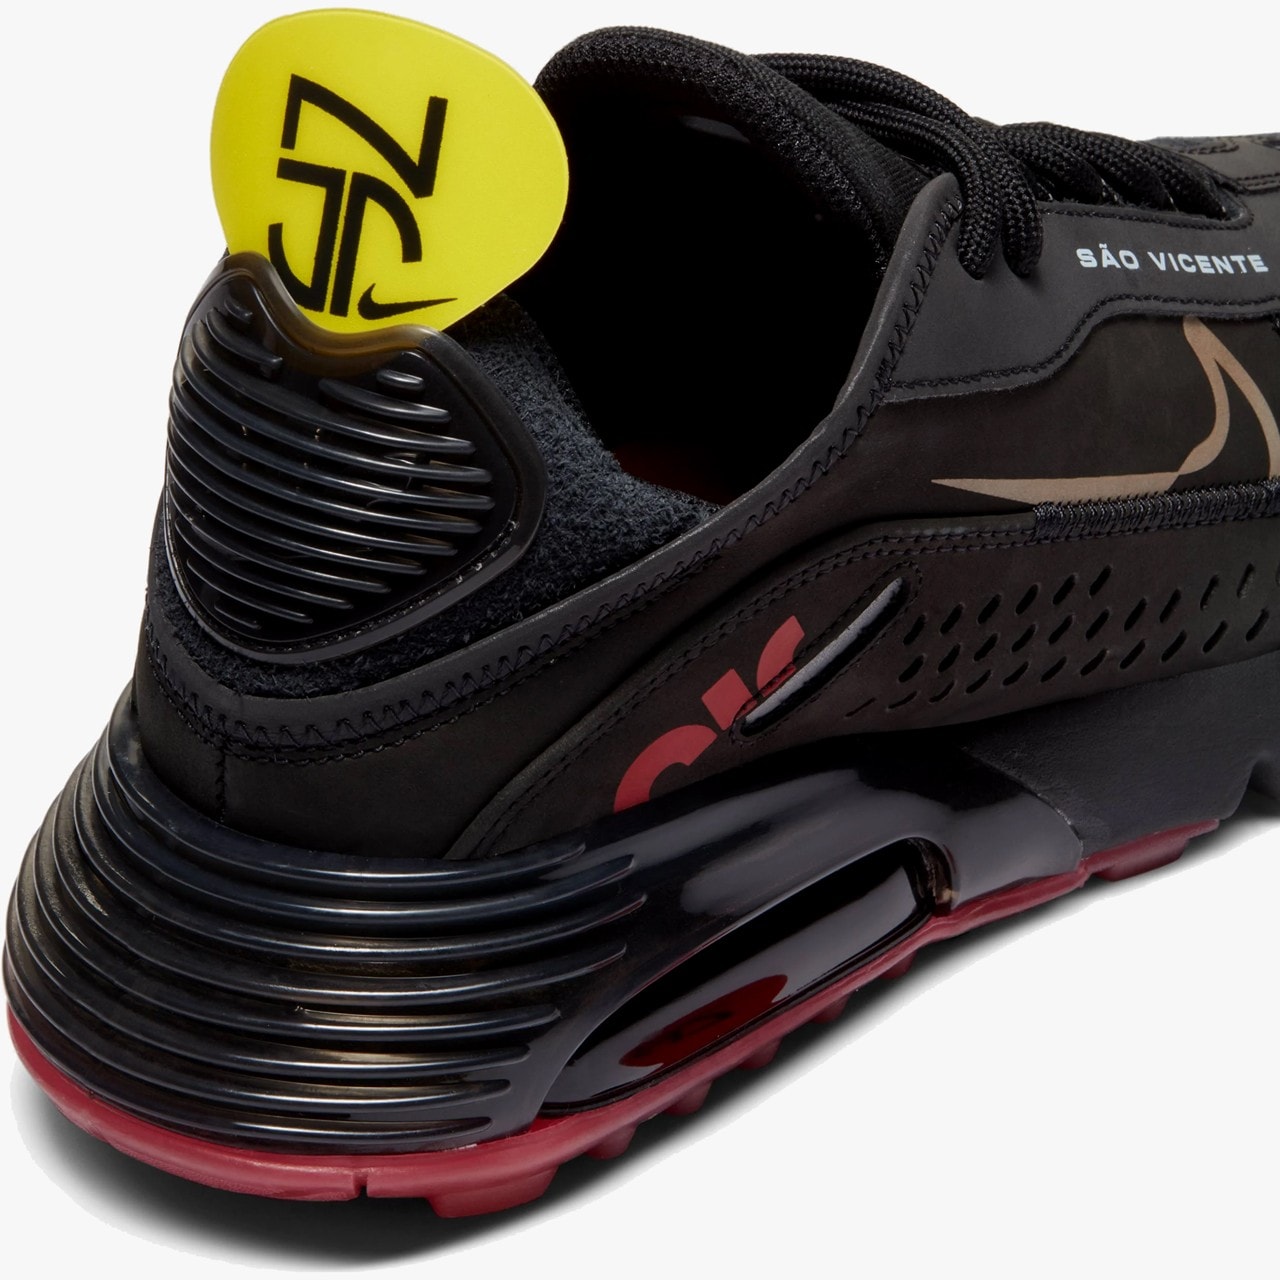 Neymar x Nike Air Max 2090 全新聯乘系列清晰圖輯、發售情報公佈